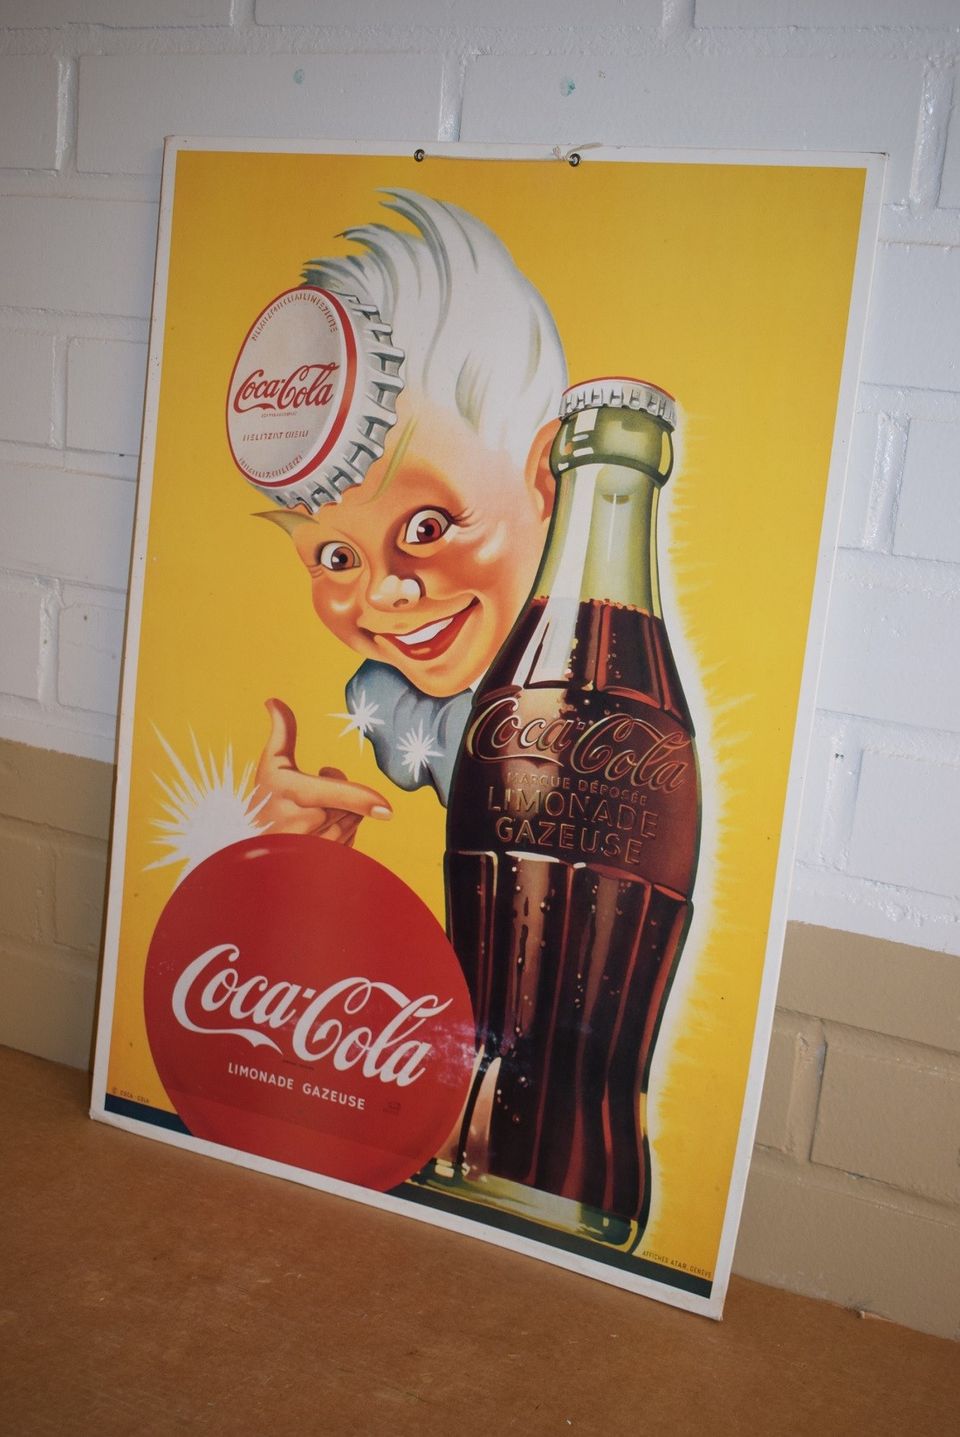 Vanha värikäs Coca-Cola -mainostaulu